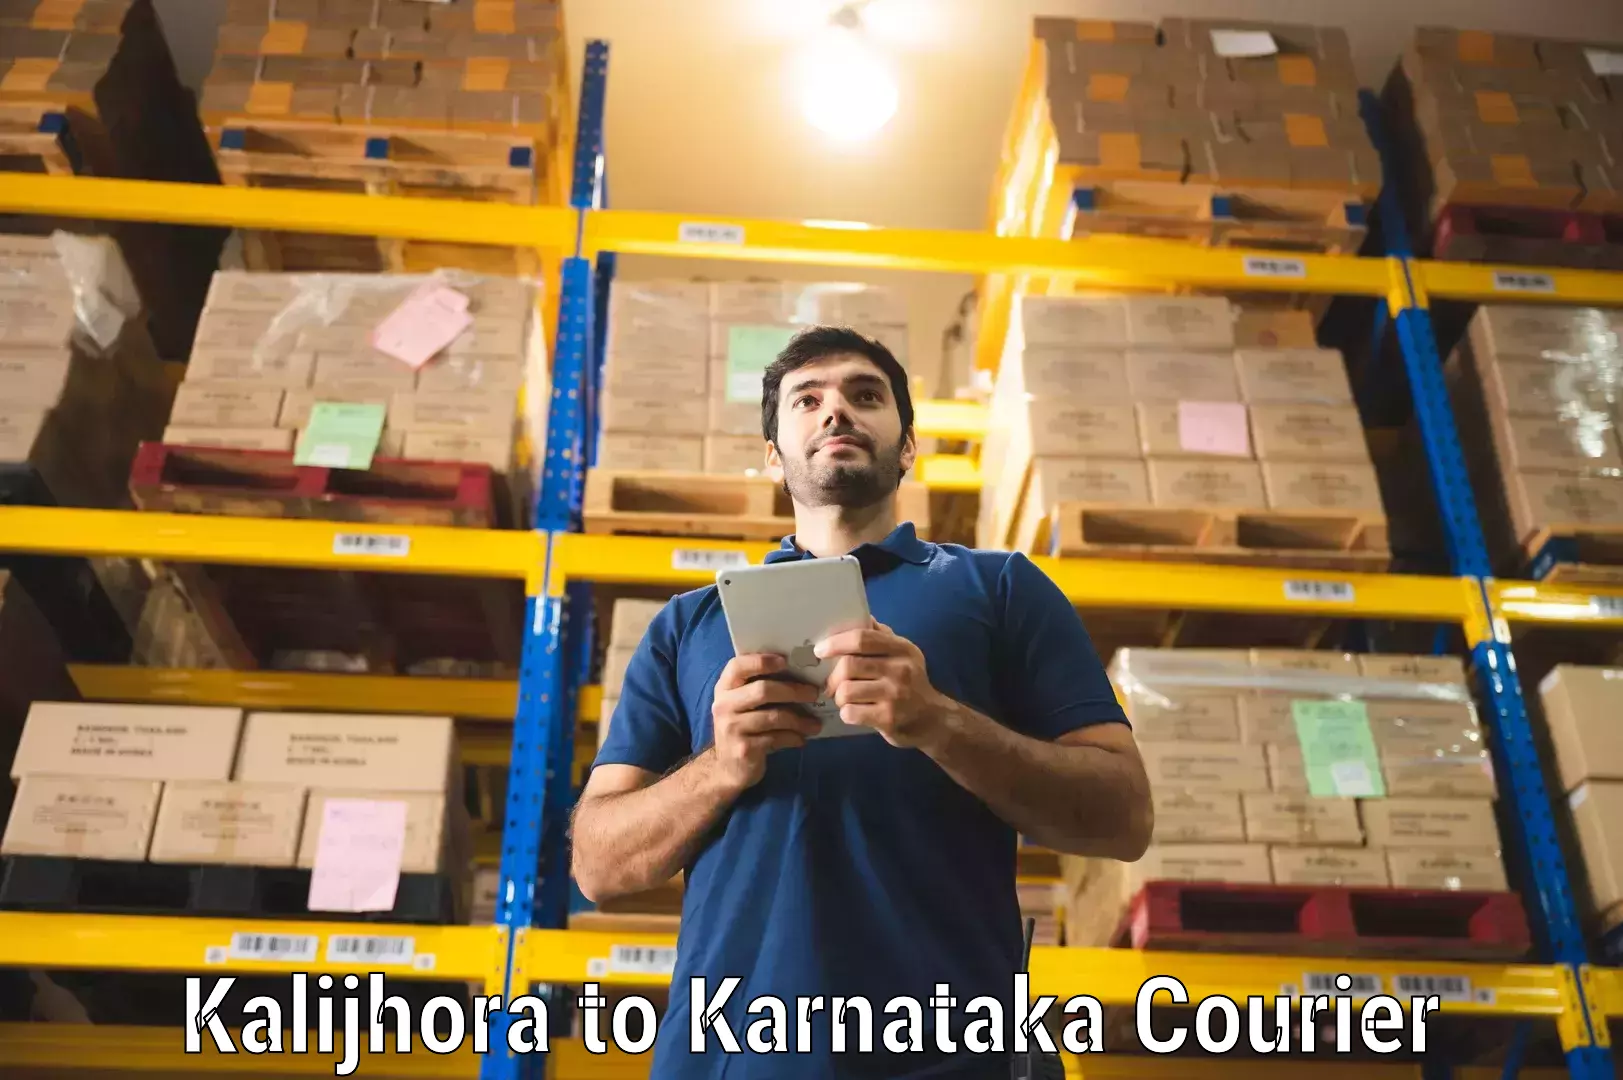 Quality courier services in Kalijhora to Karnataka